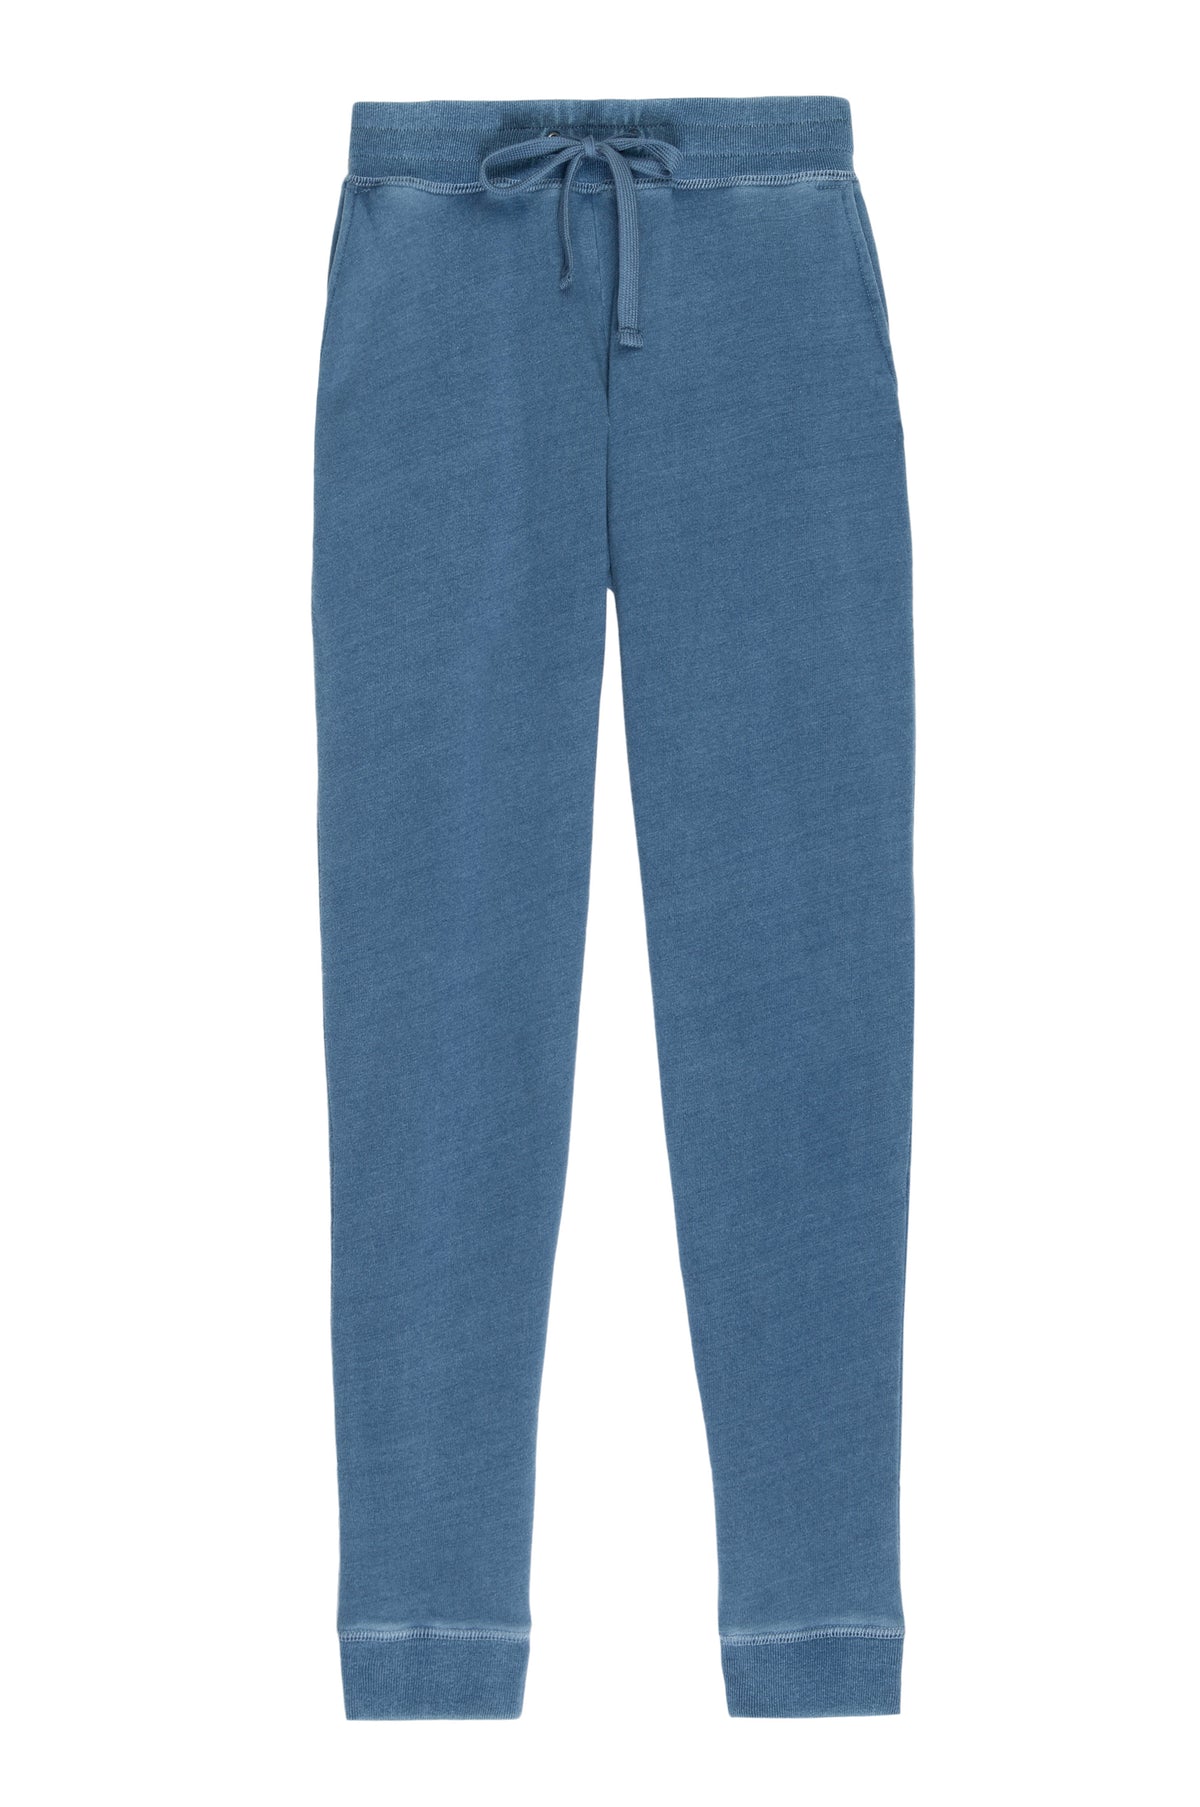 RAILS Oakland Trousers in Medium Indigo – shopatanna